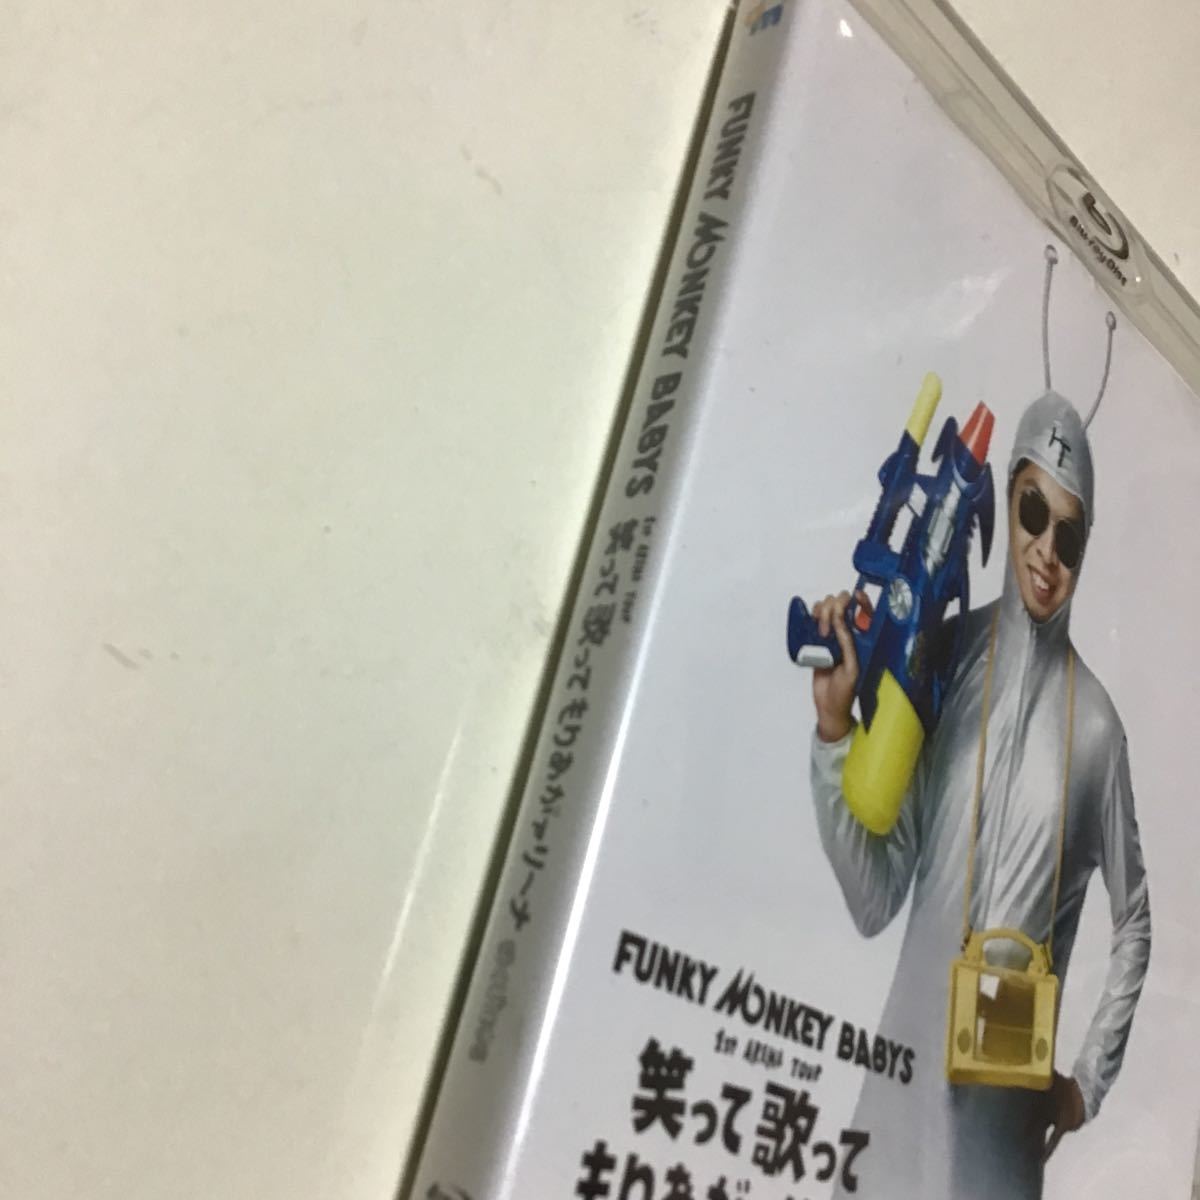 FUNKY MONKEY BABYS Blu-ray [FUNKY MONKEY BABYS 1st ARENA TOUR笑って歌ってもりあがァリーナ 〜行くぞ日本!! 〜] 12/8/1発売 オリコン_画像2